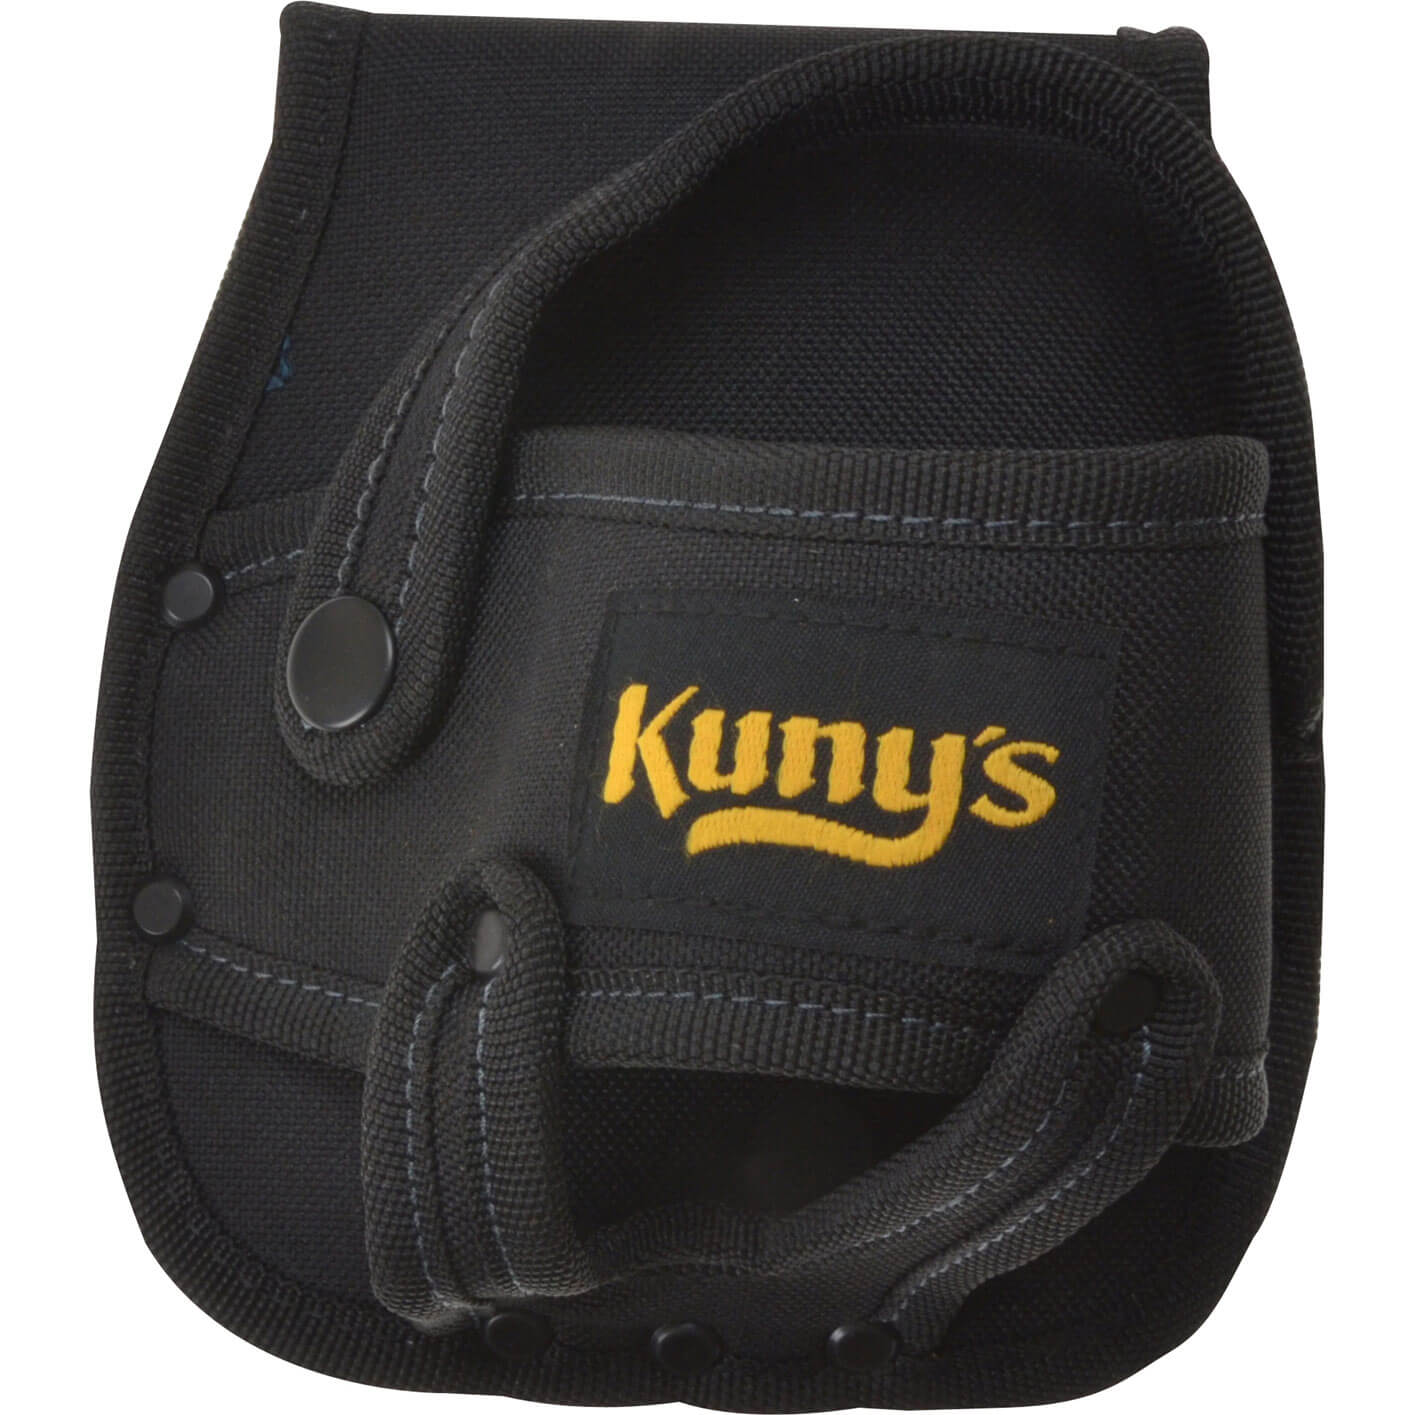 Image of Kunys Large Tape Holder